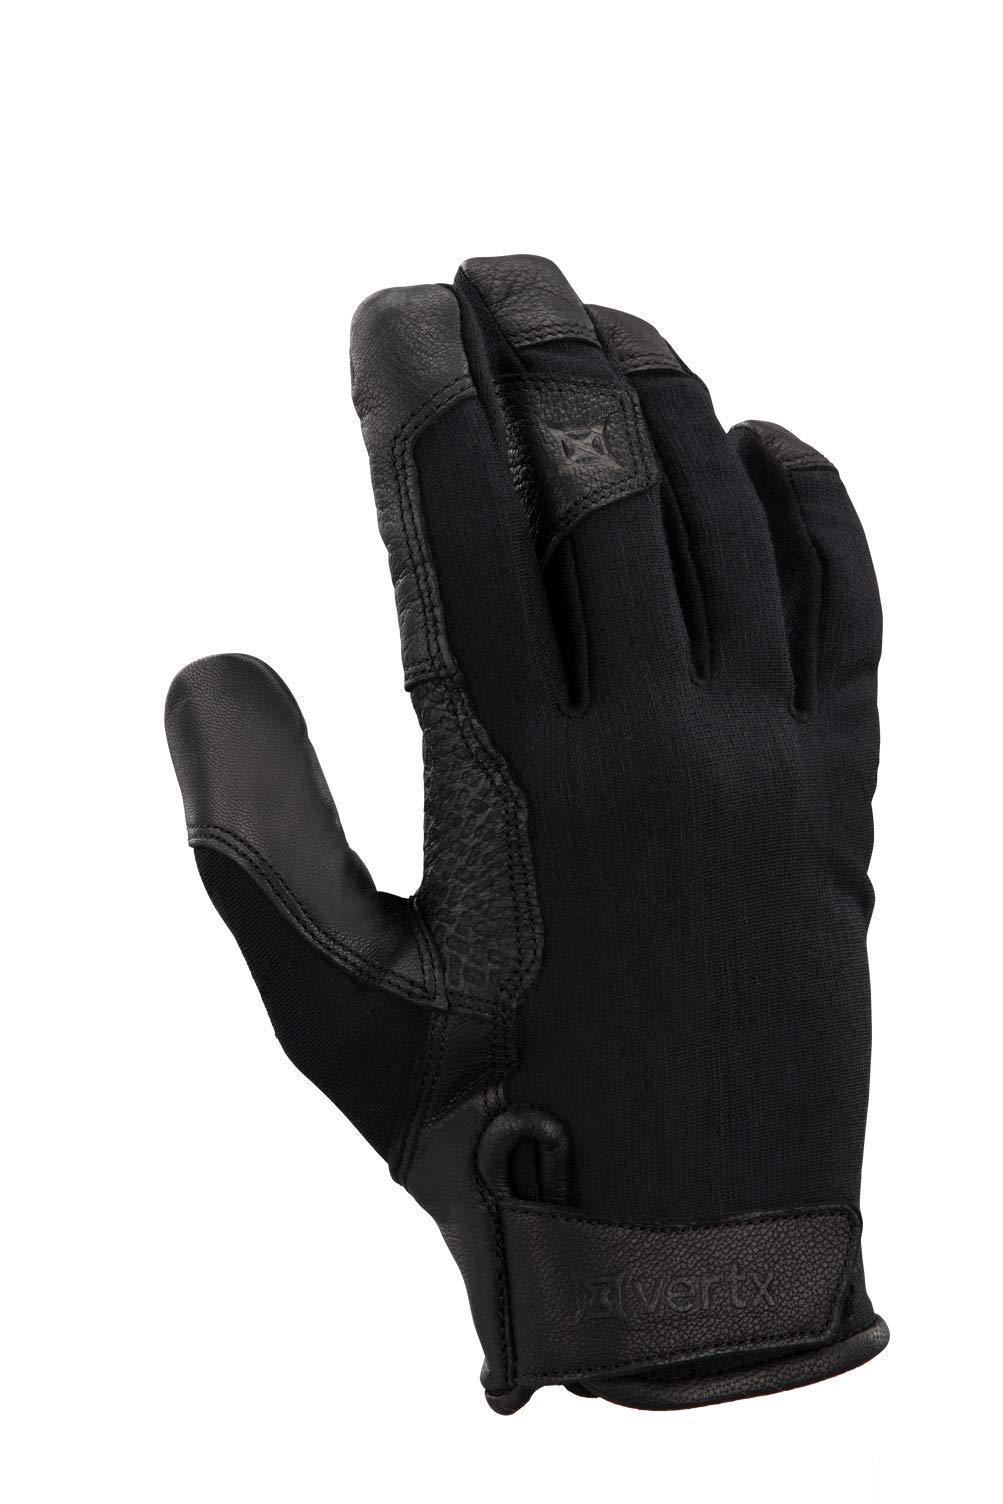 [Australia] - Vertx Men's COF Glove It's Black 2X 